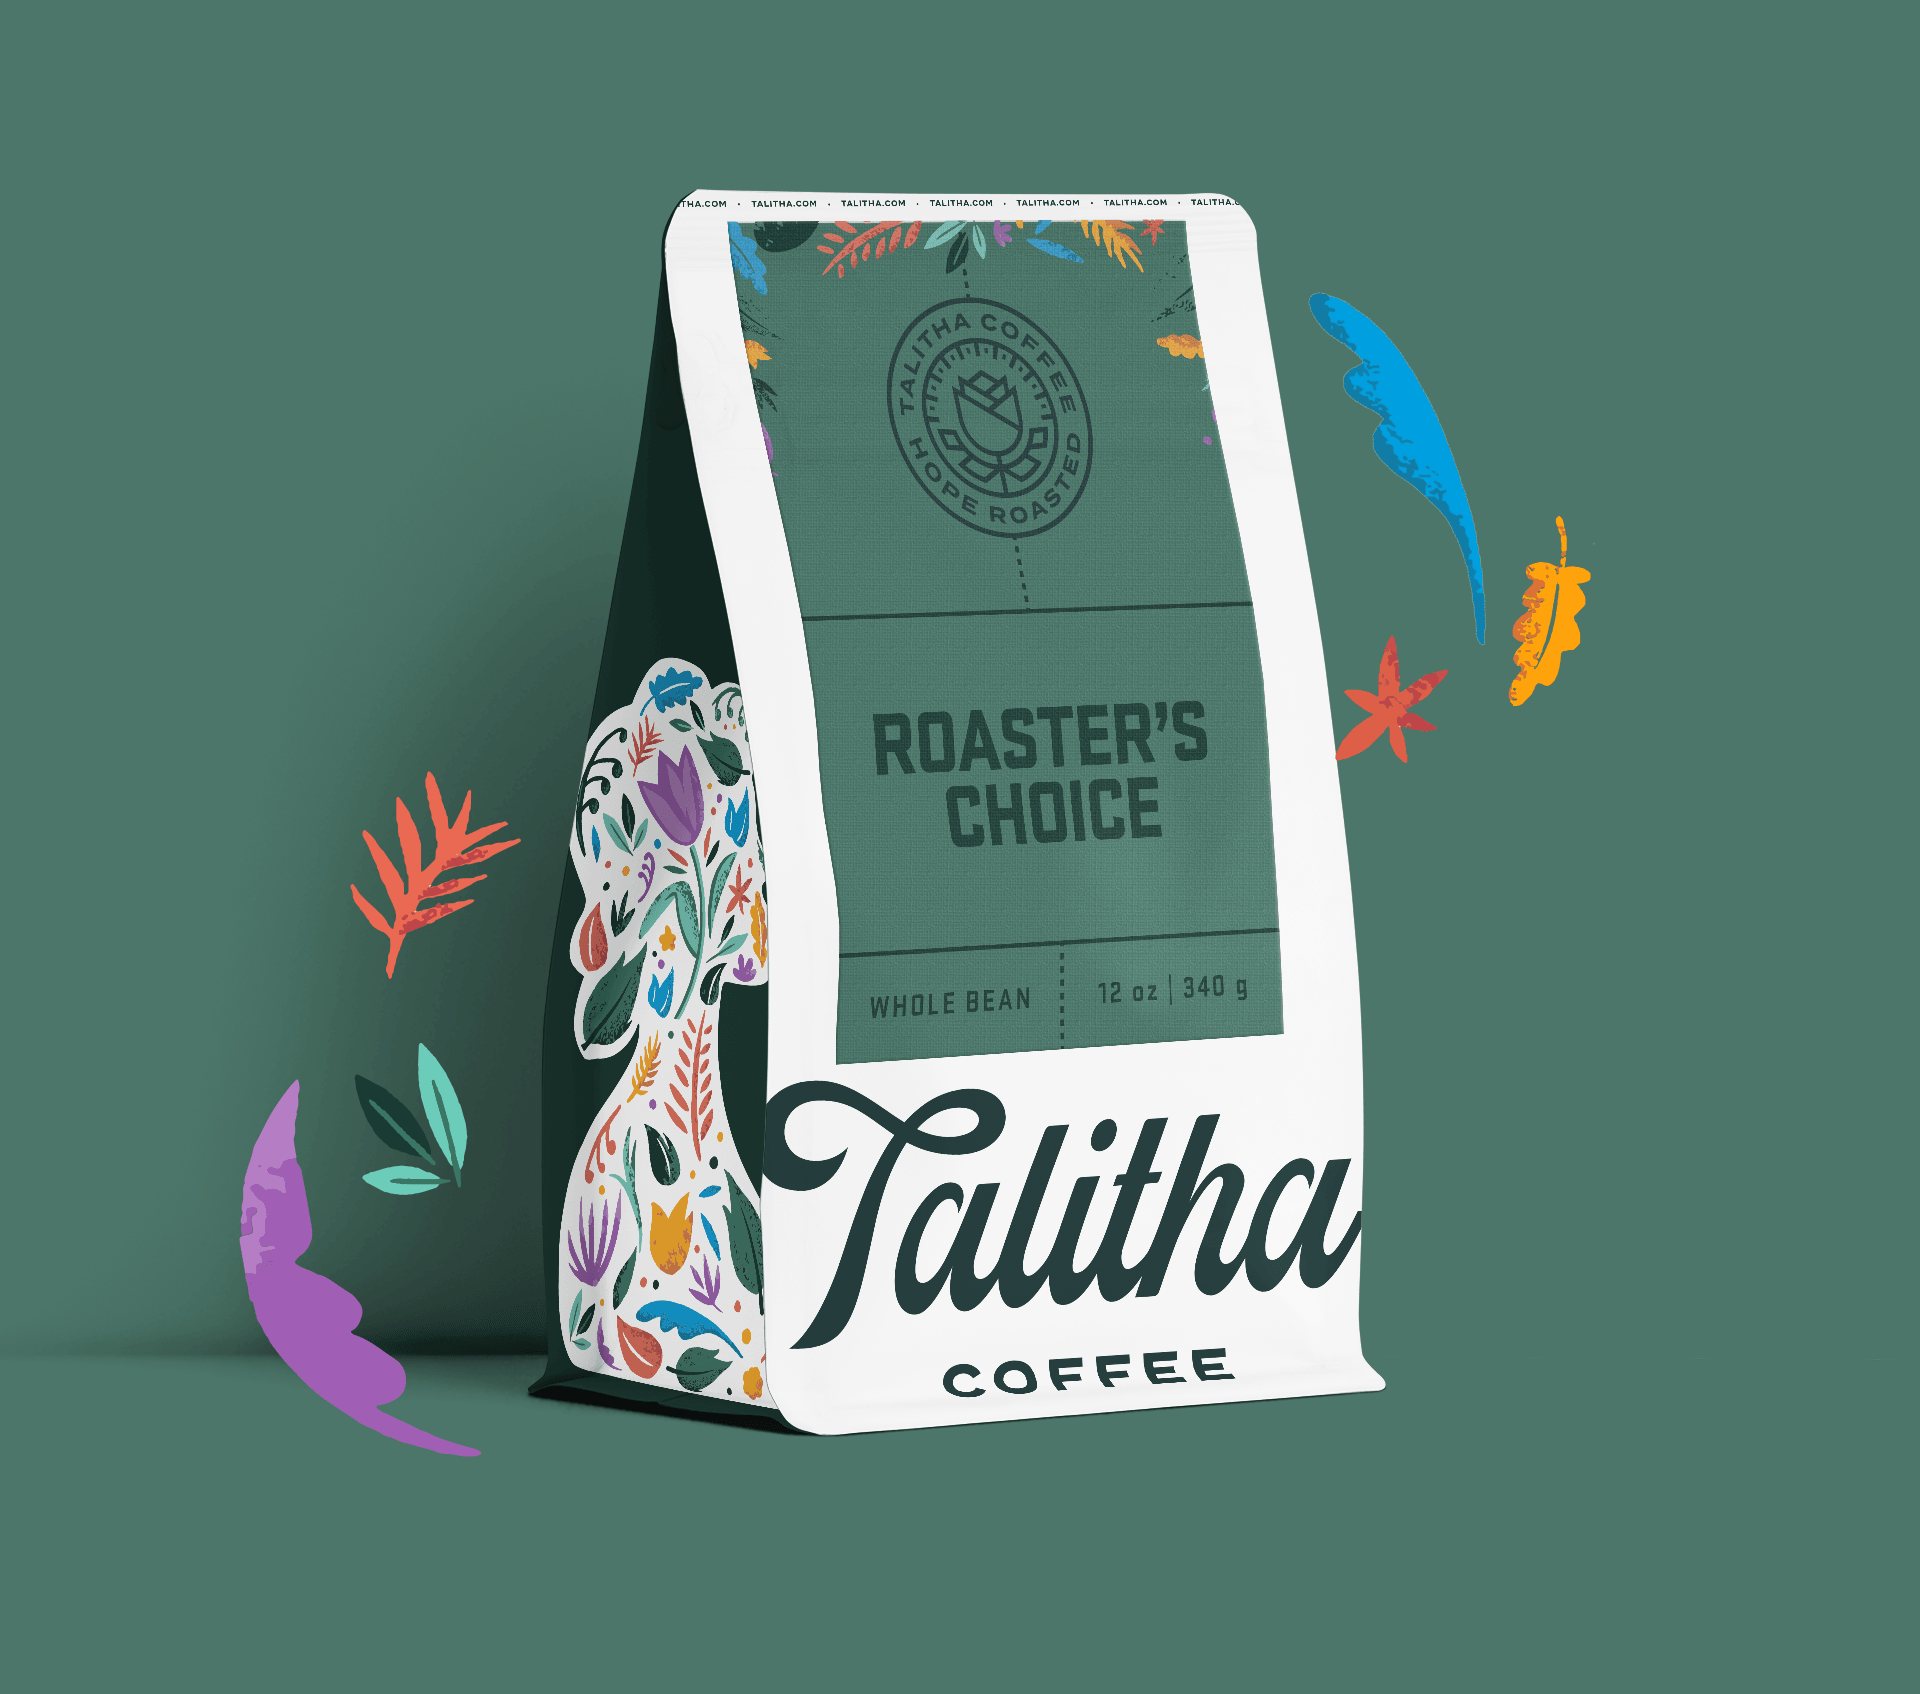 Roaster's Choice - Talitha Coffee